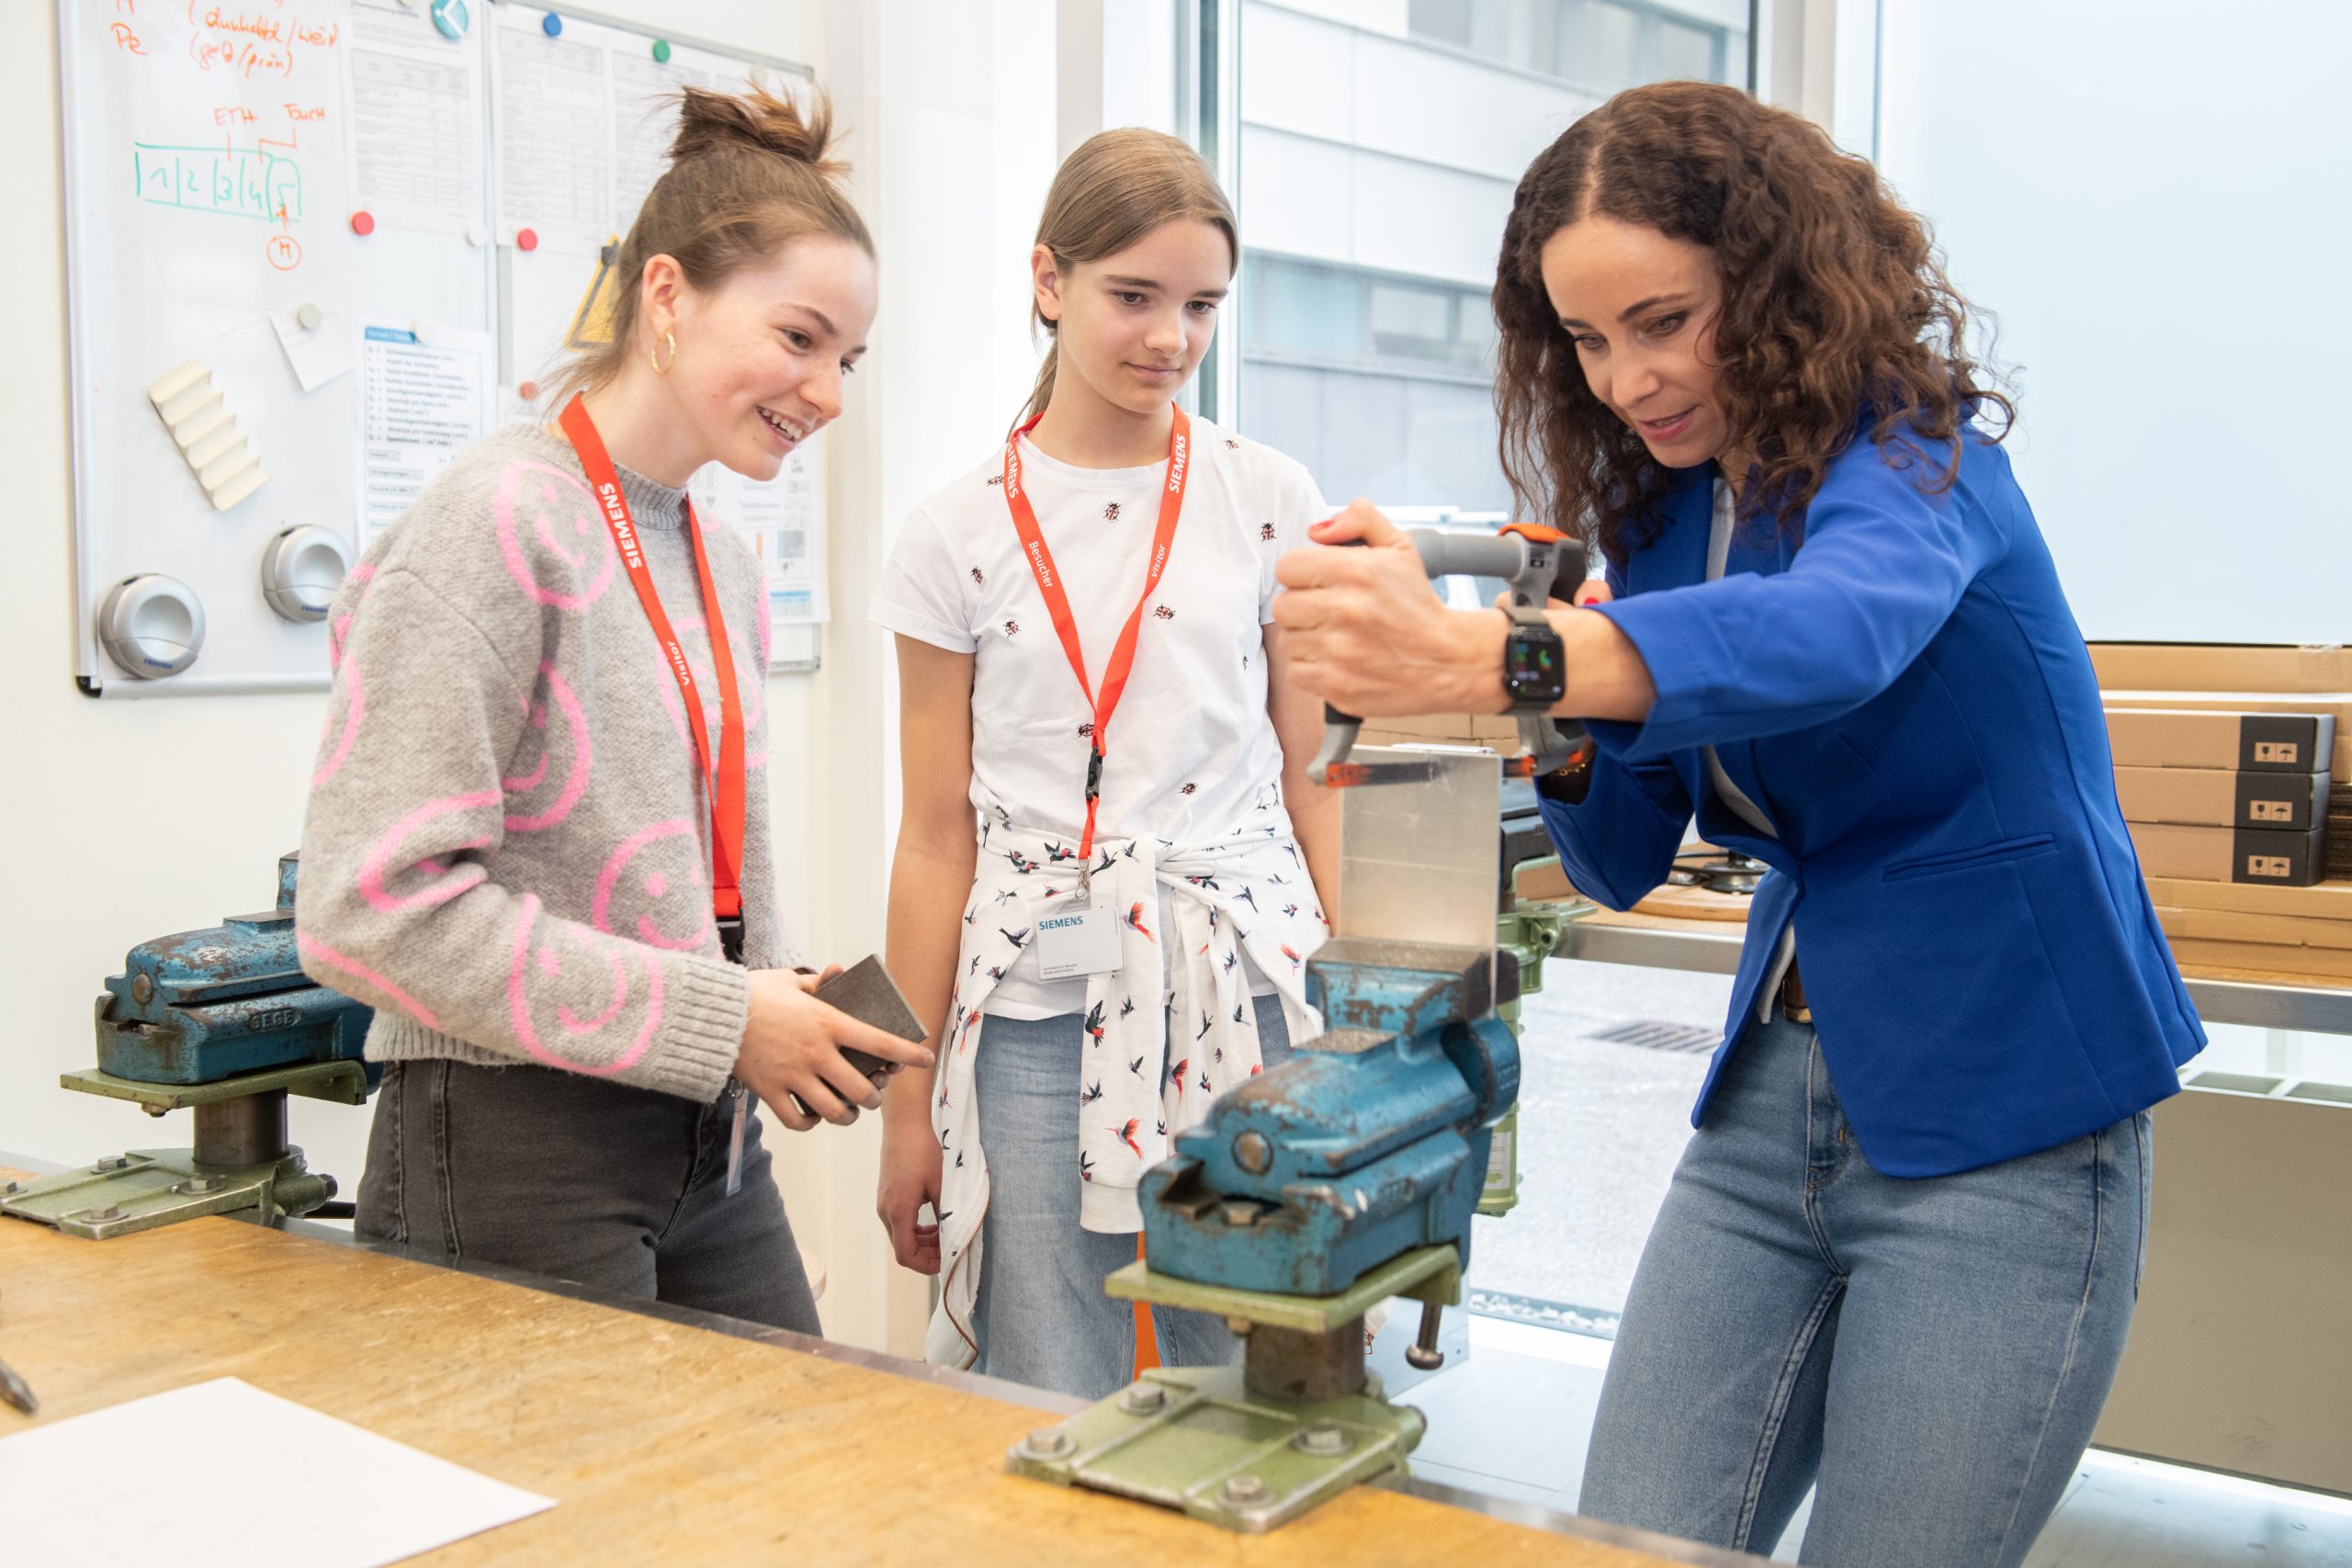 Frauen in die Technik: Girls‘ Day bei Siemens in Tirol voller Erfolg